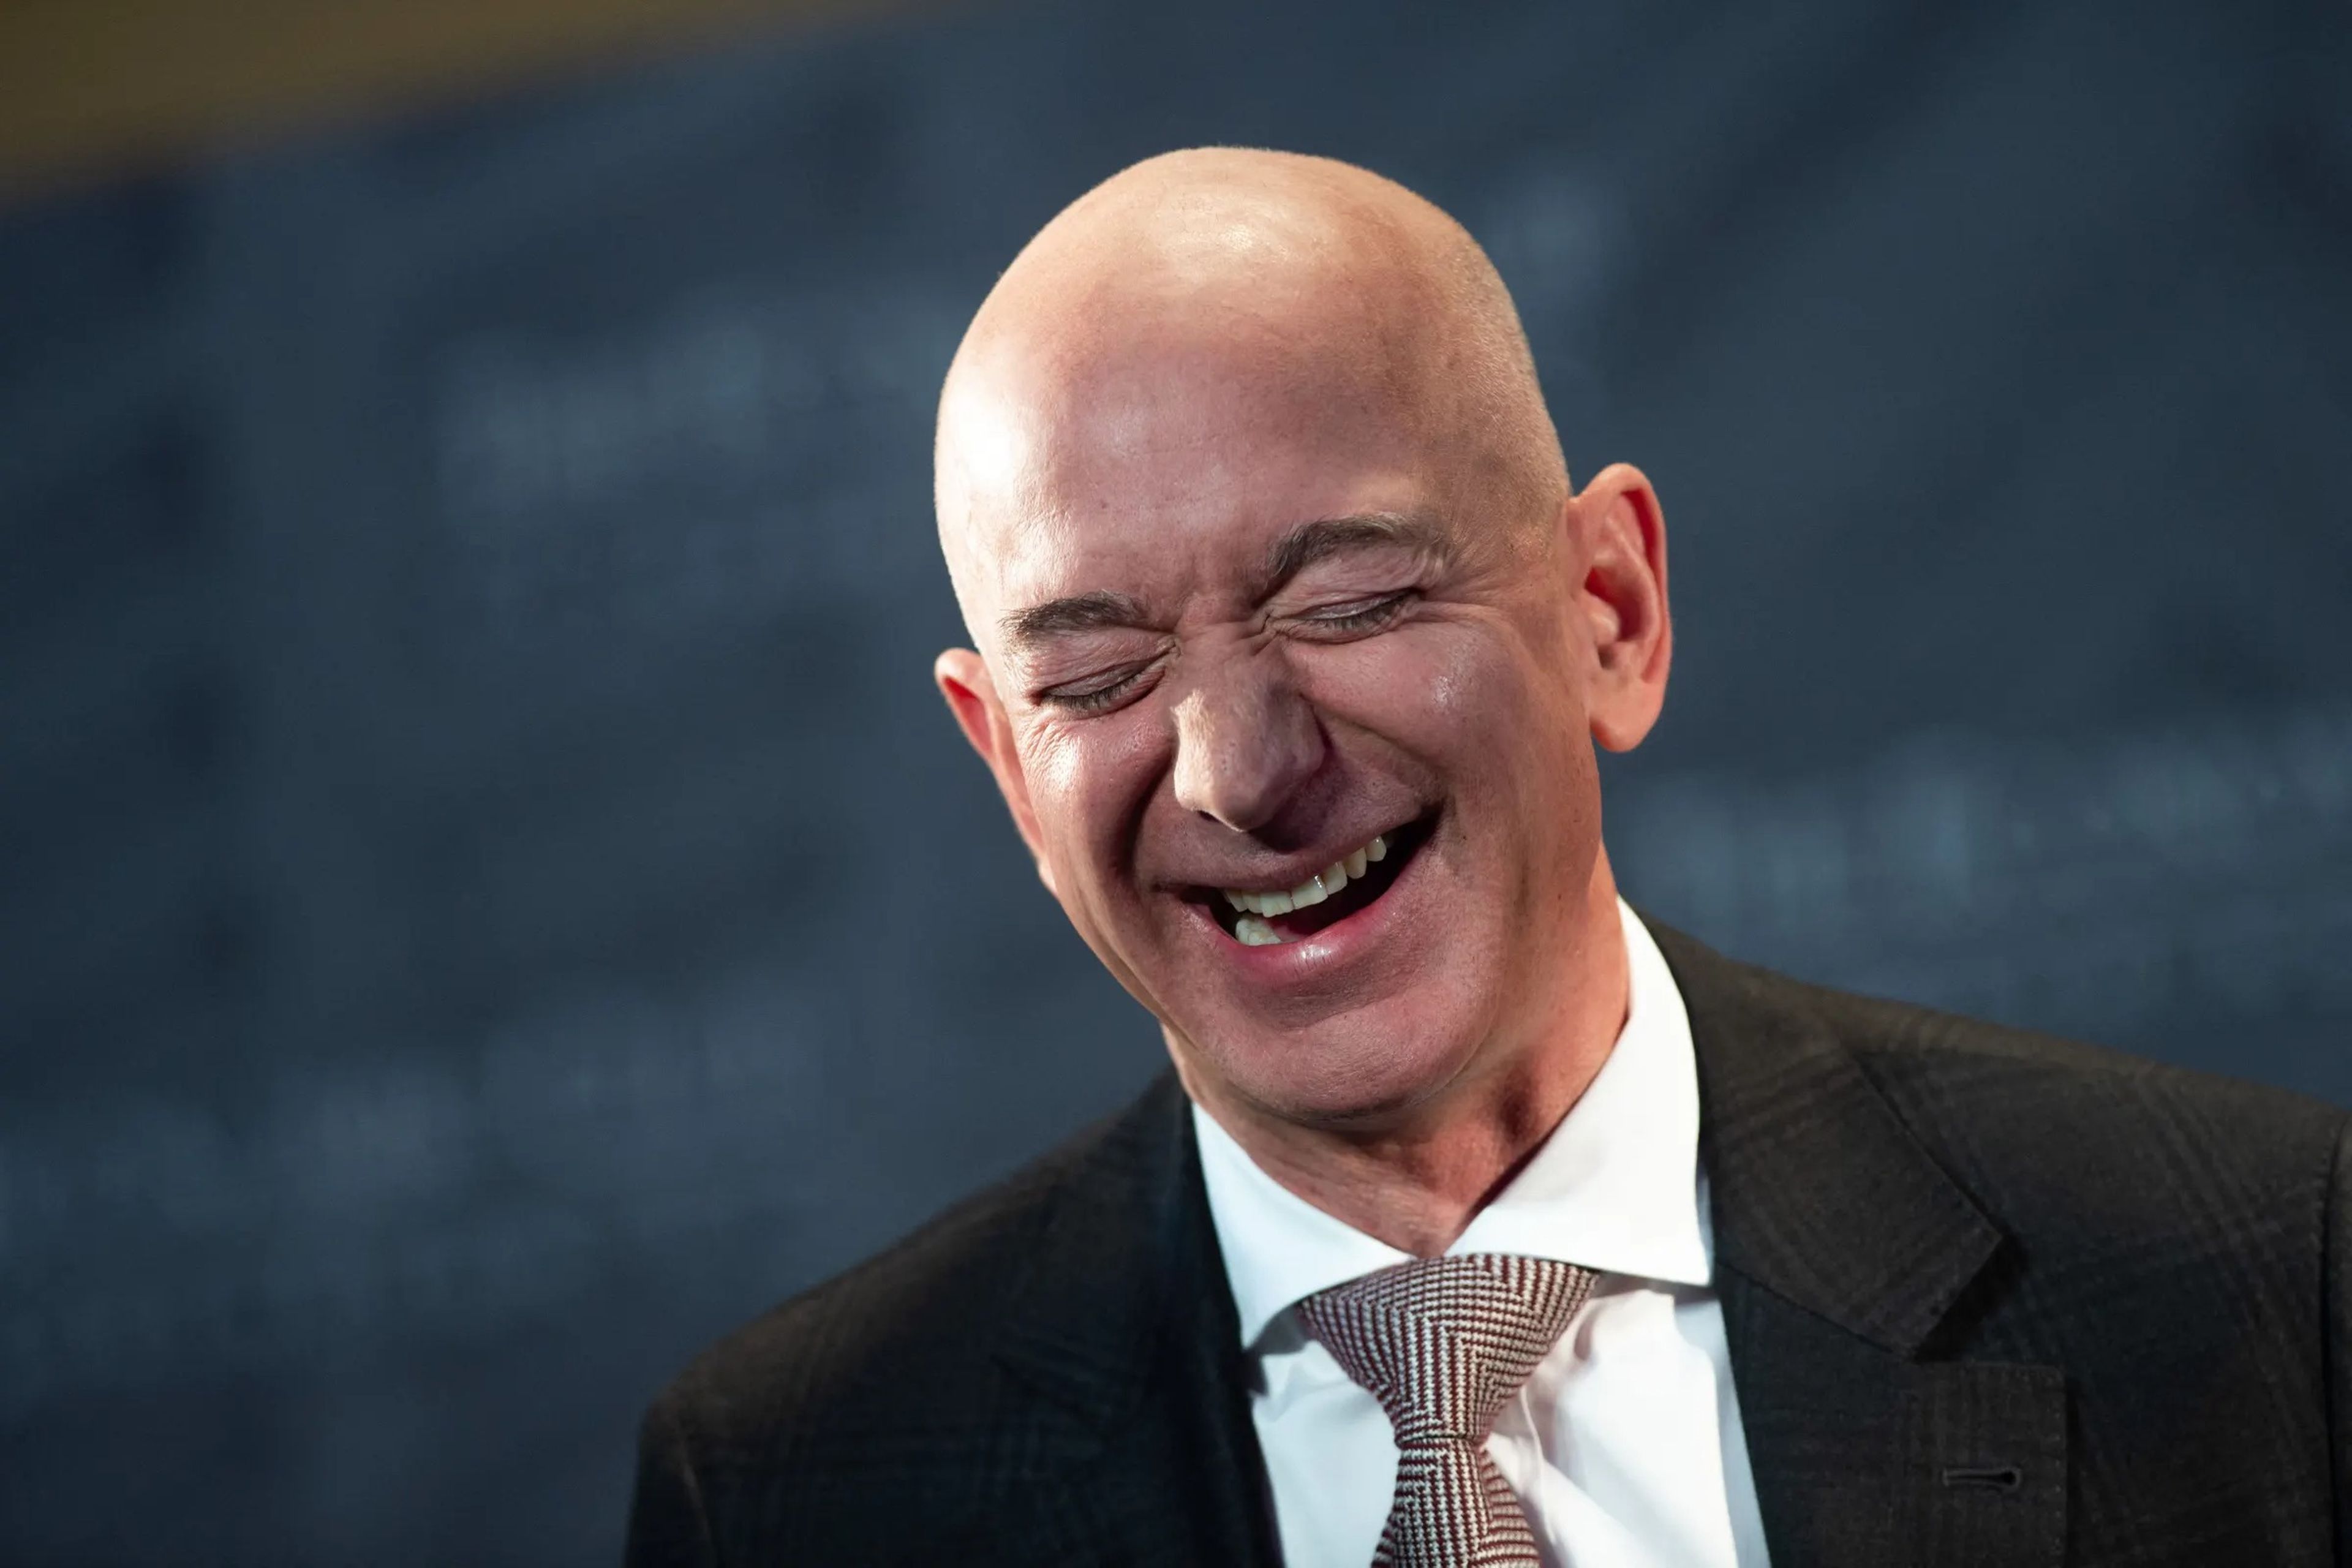 Jeff Bezos, founder of Amazon.